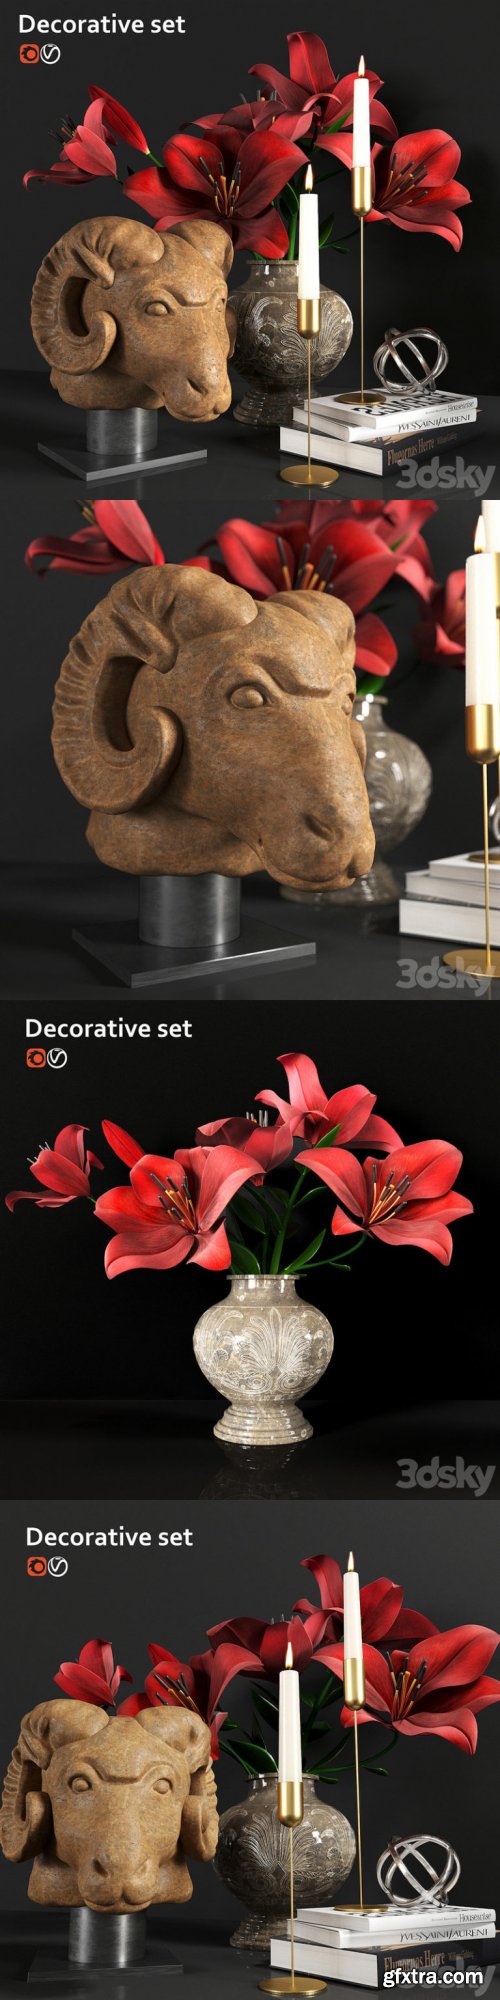 Decorative set 